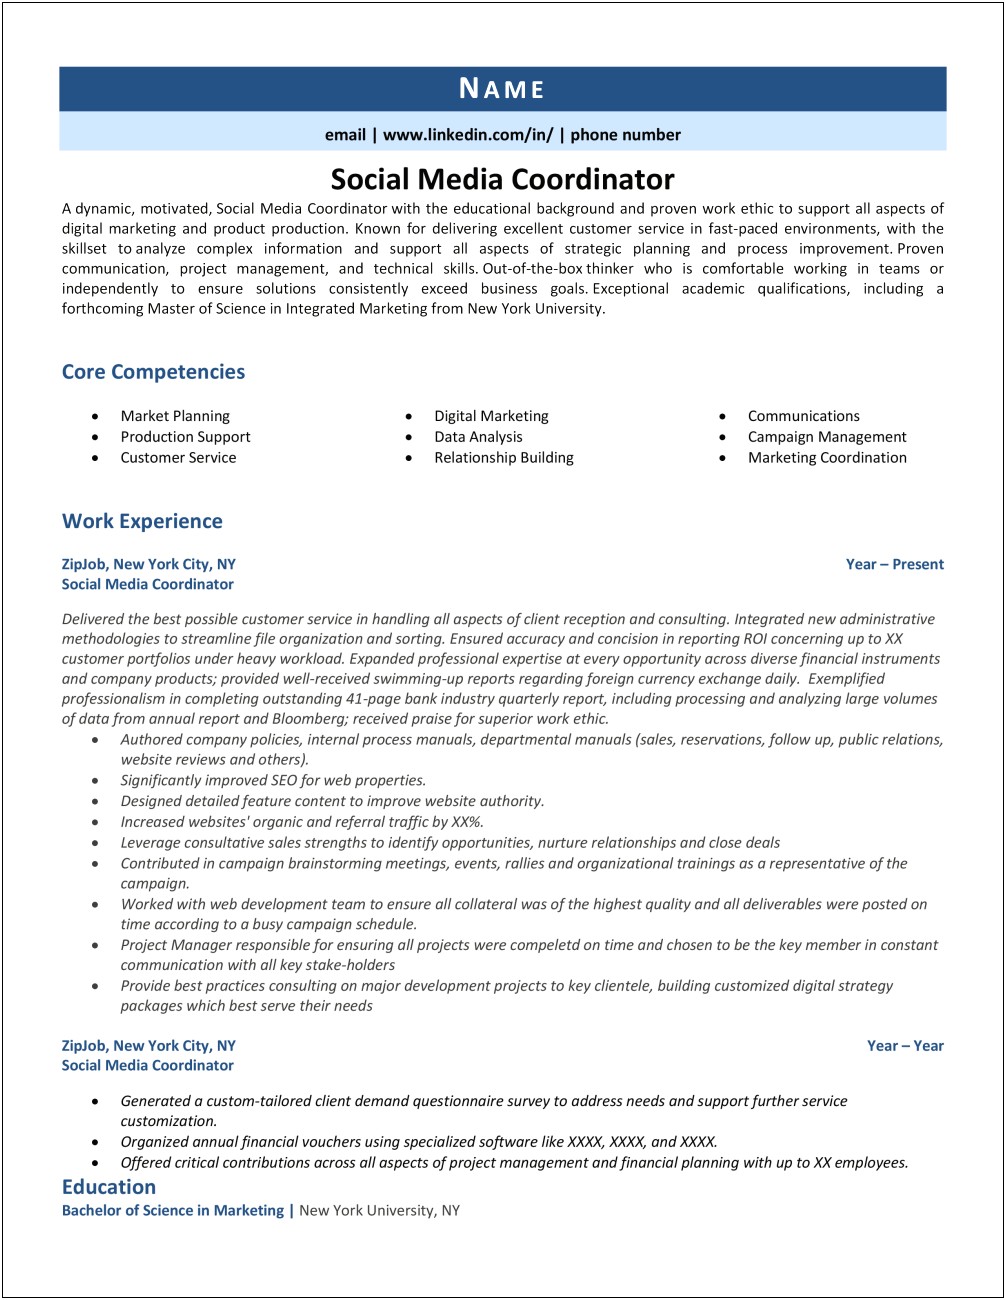 Social Skills And Competencies Resume